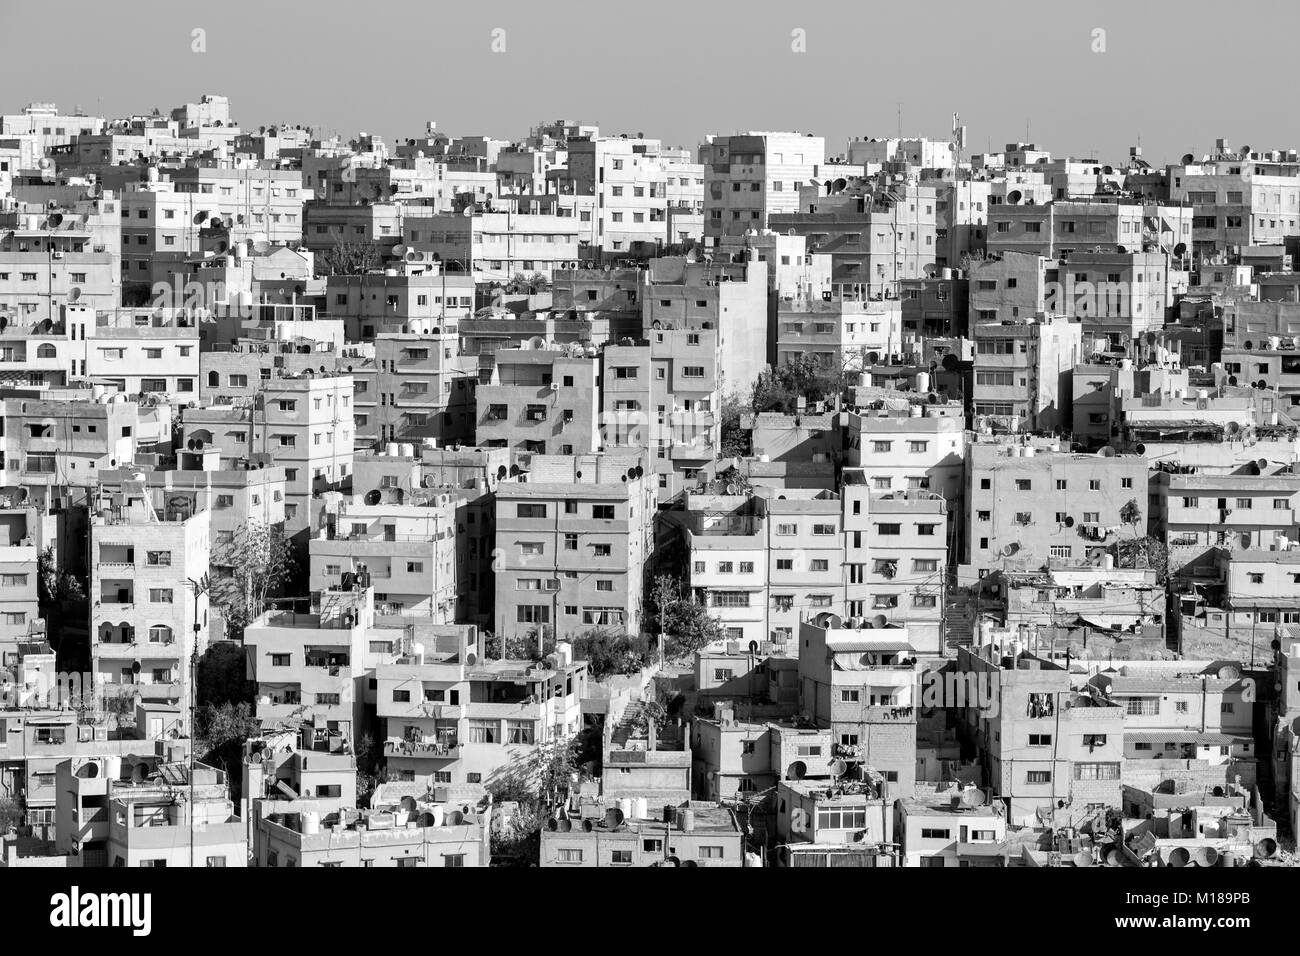 Jordan Amman Black and White Stock Photos & Images - Alamy